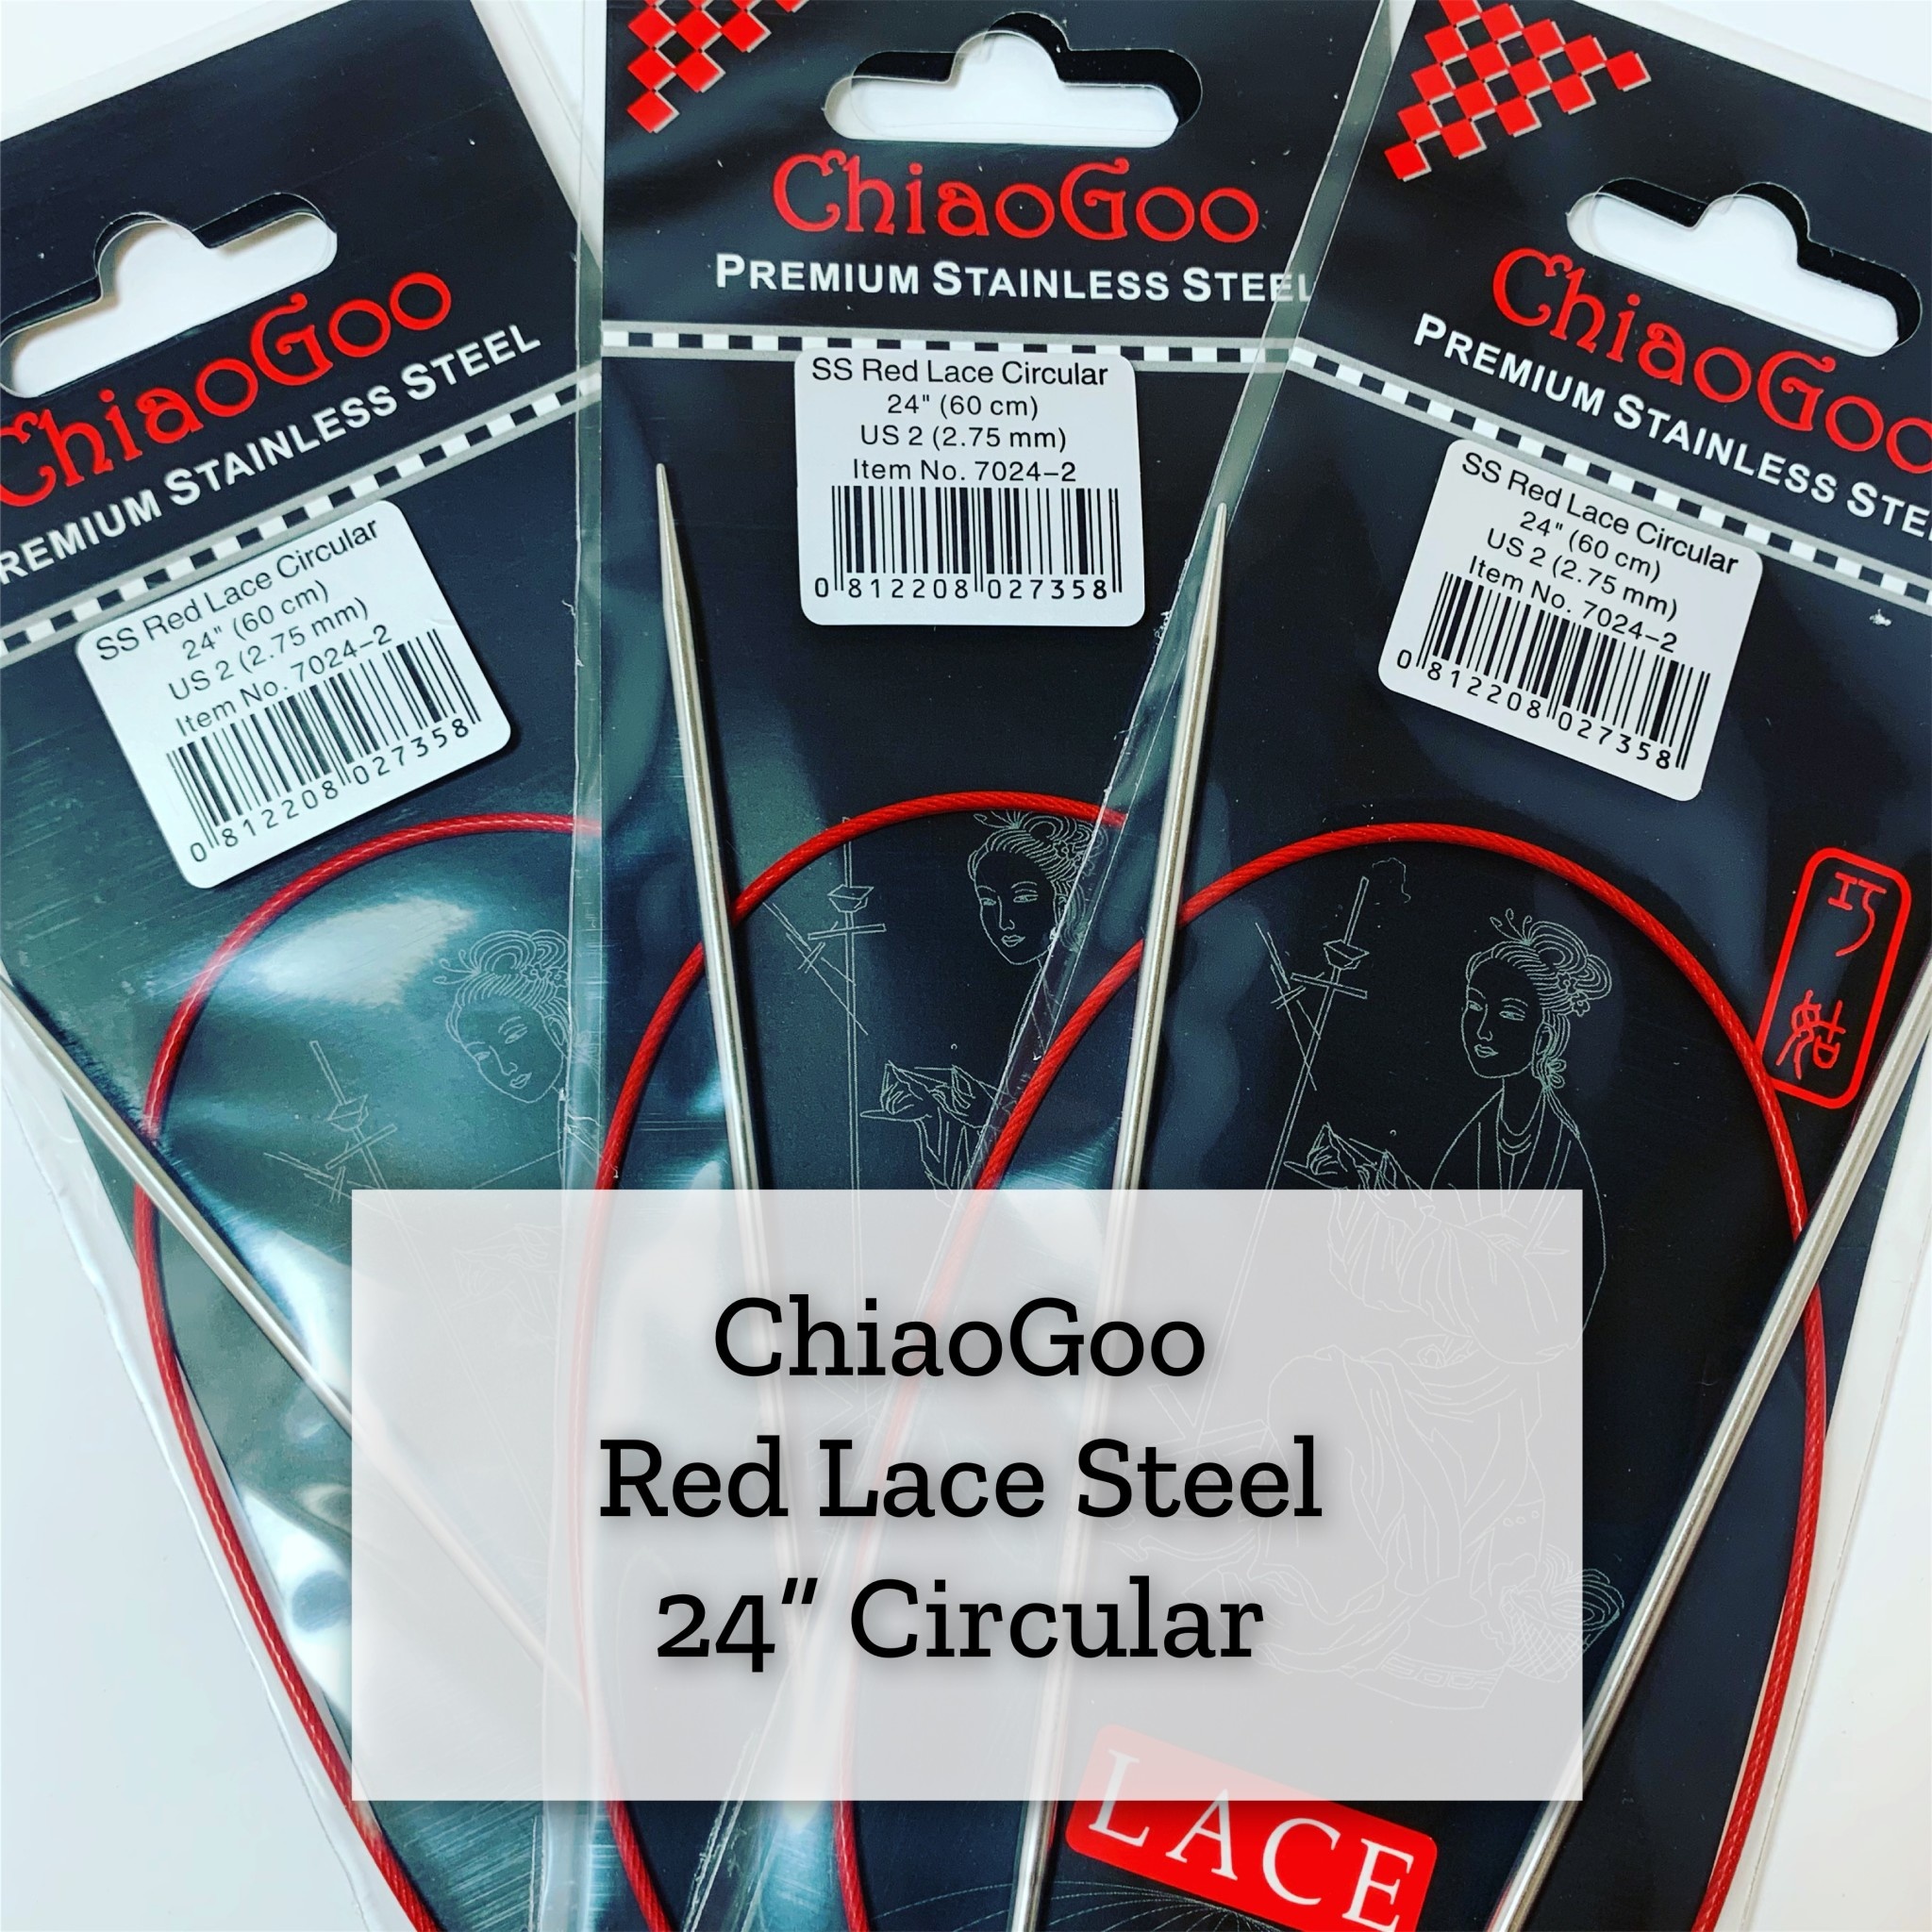 ChiaoGoo Red Lace Steel - 24" 10 mm